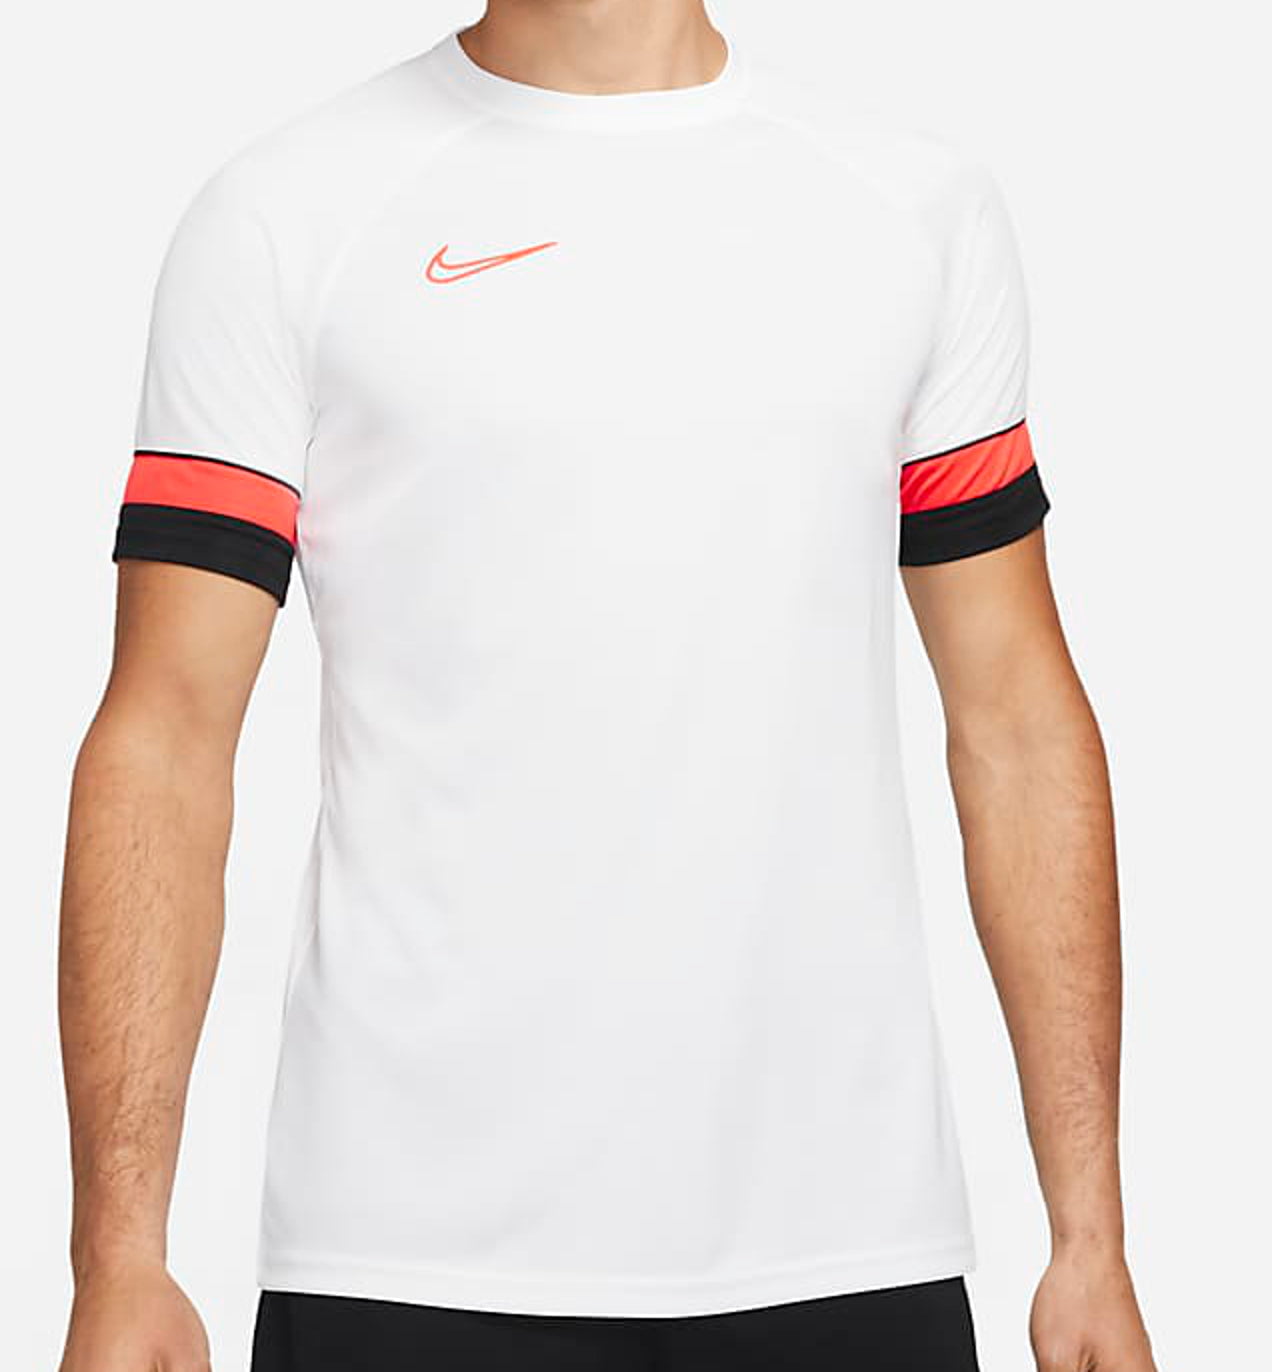 Nike Mens Soccer Academy Dri-FIT T-Shirt,White,Small